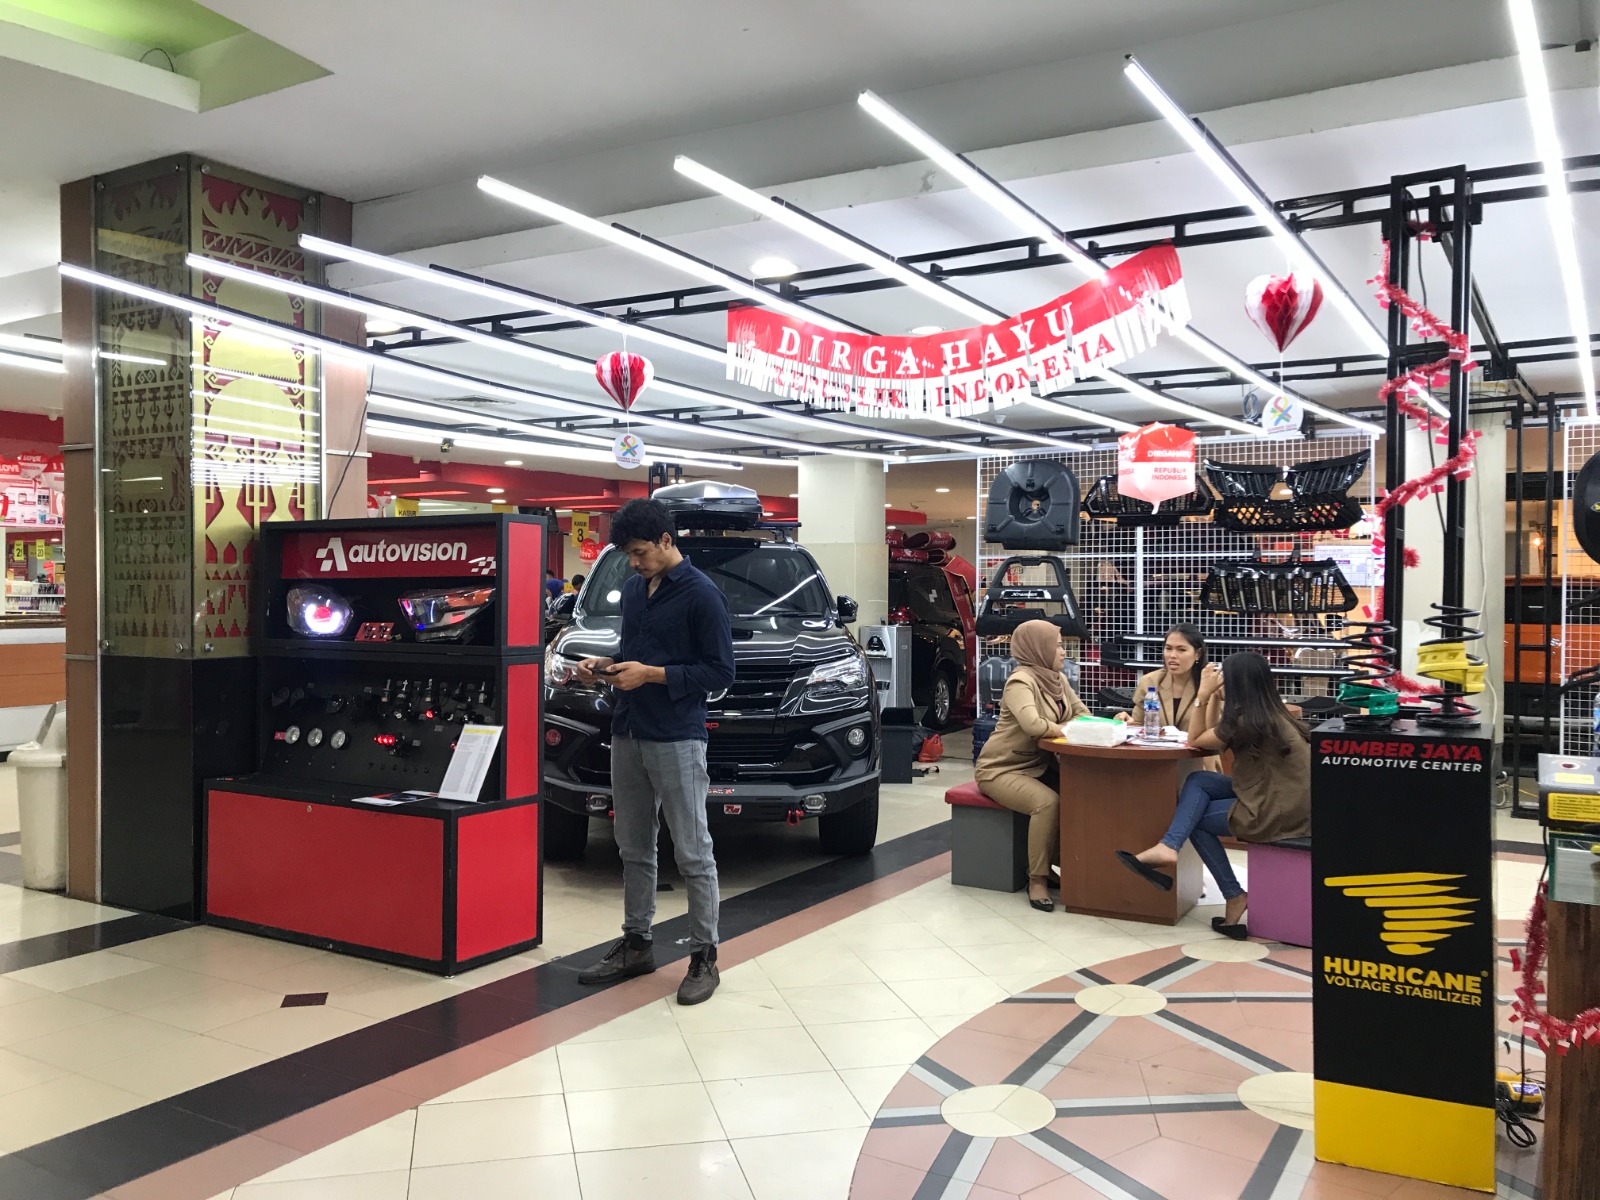 Autovision Hadir di Mall Chandra Bandar Lampung, Tawarkan Teknologi Projector Bi-LED dan Promo Spesial Pameran